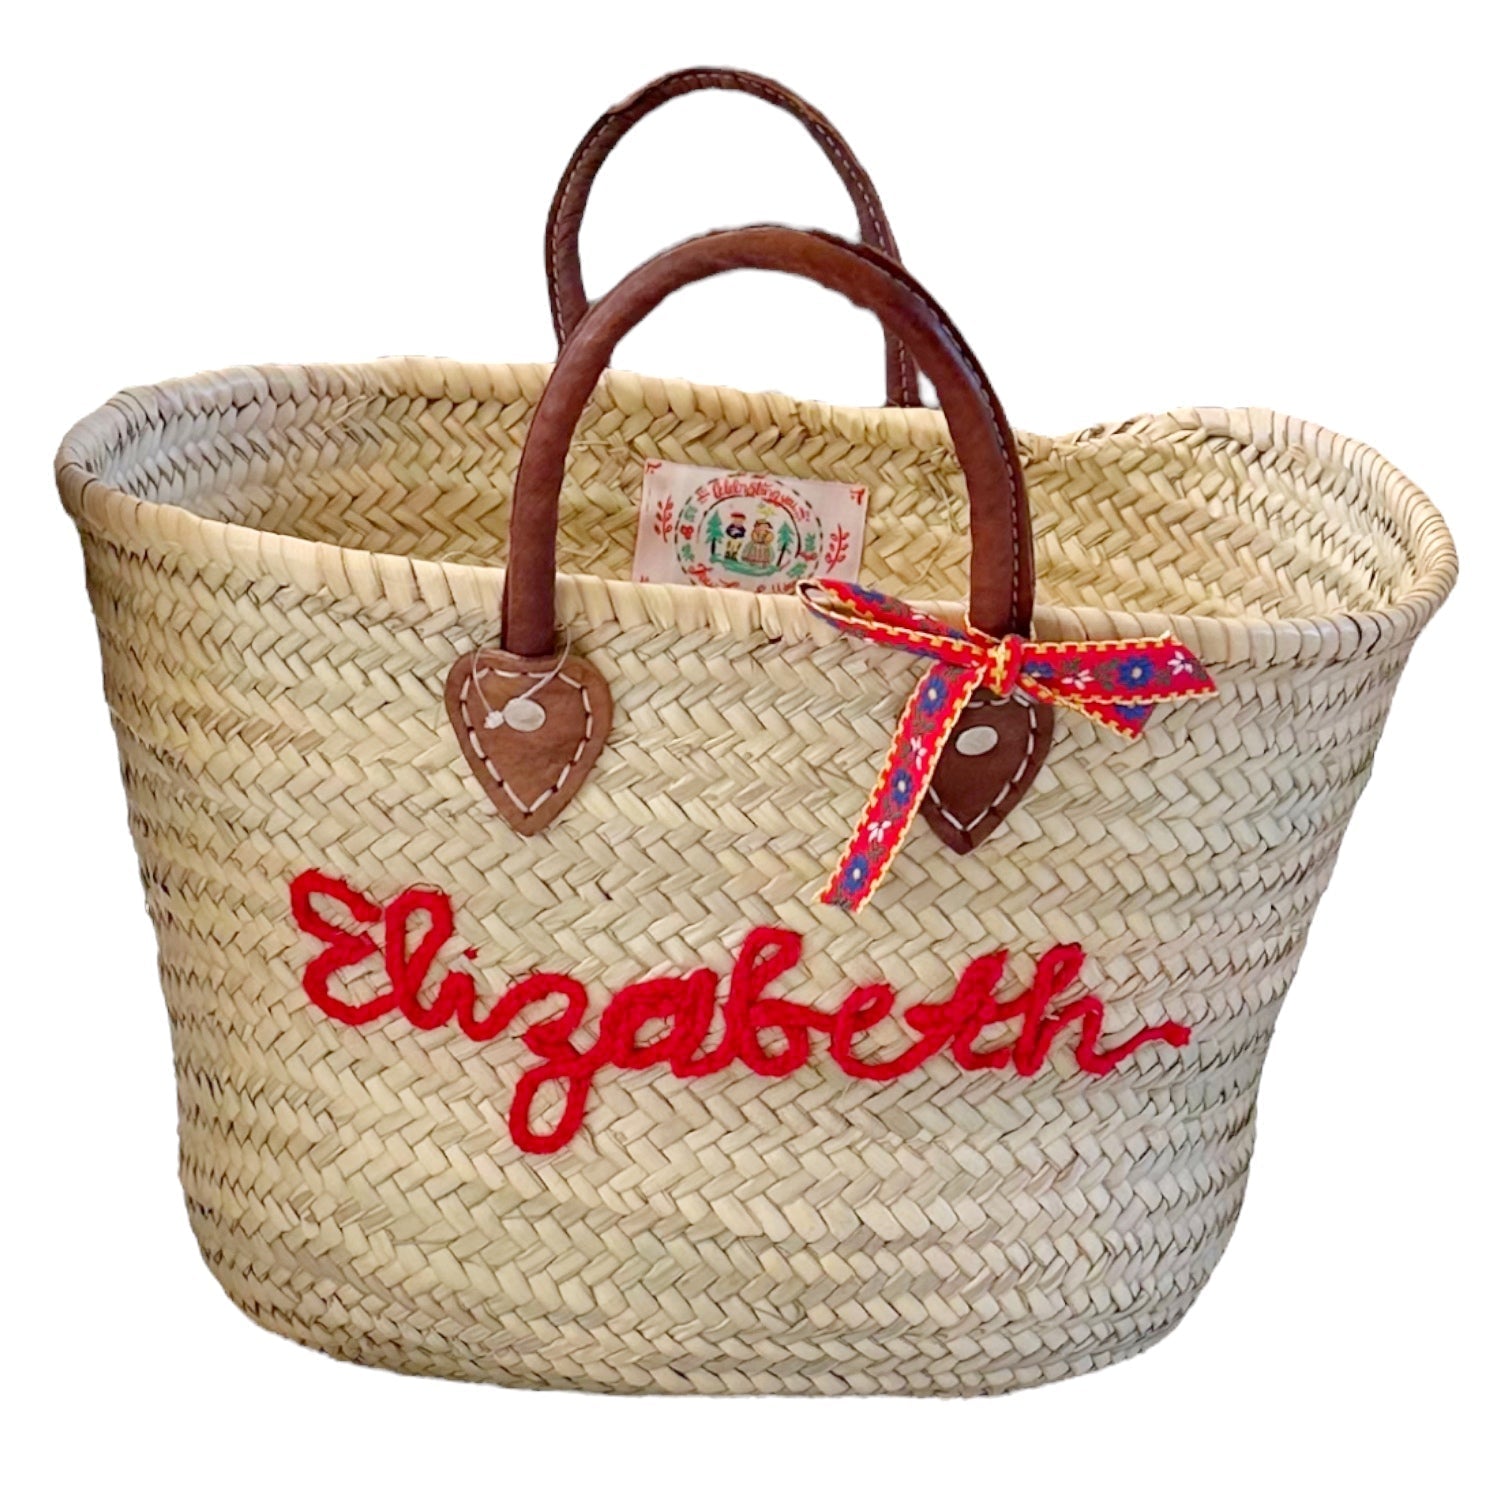 Big Embroidered Bag / Basket / French Market Basket / Straw Basket - blue - Premium  from Tricia Lowenfield Design 